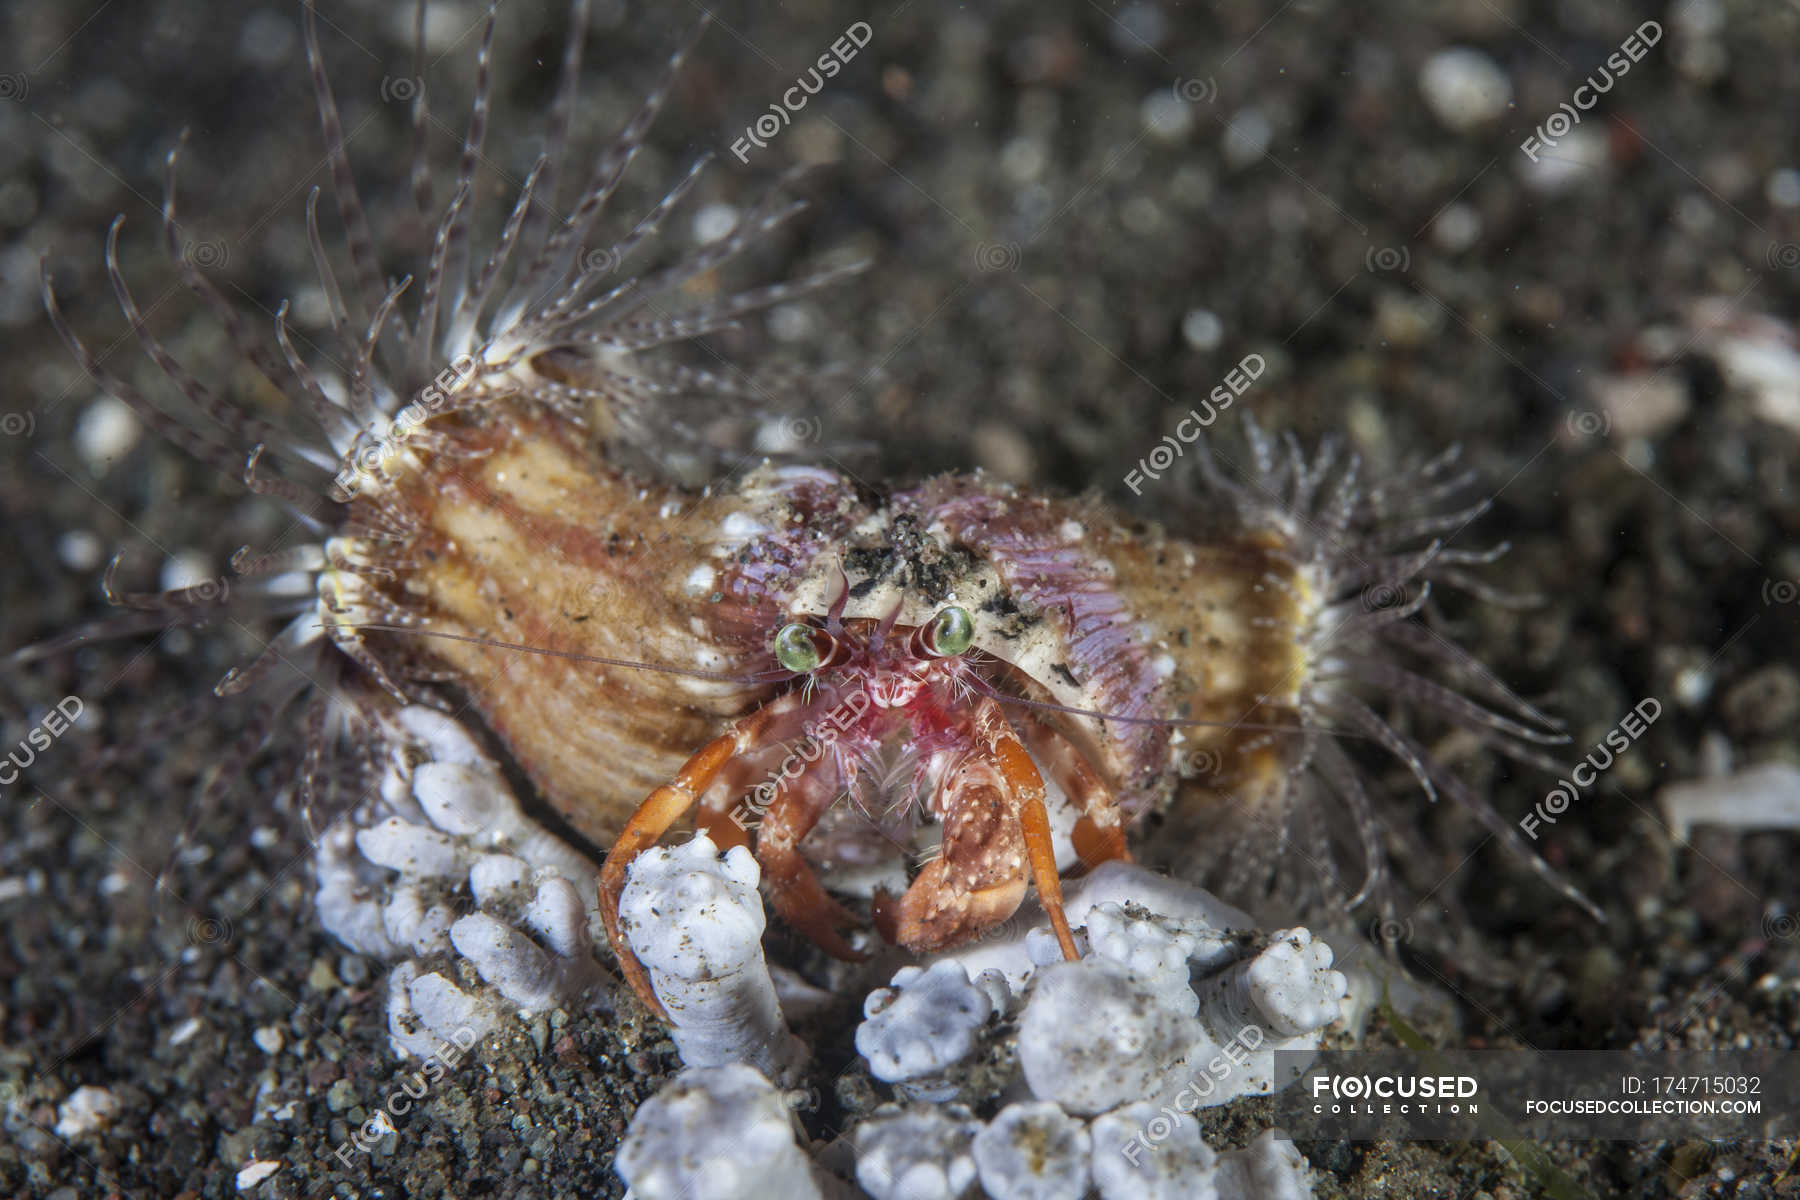 Anemone hermit crab on seafloor — shell, habitat - Stock Photo | #174715032